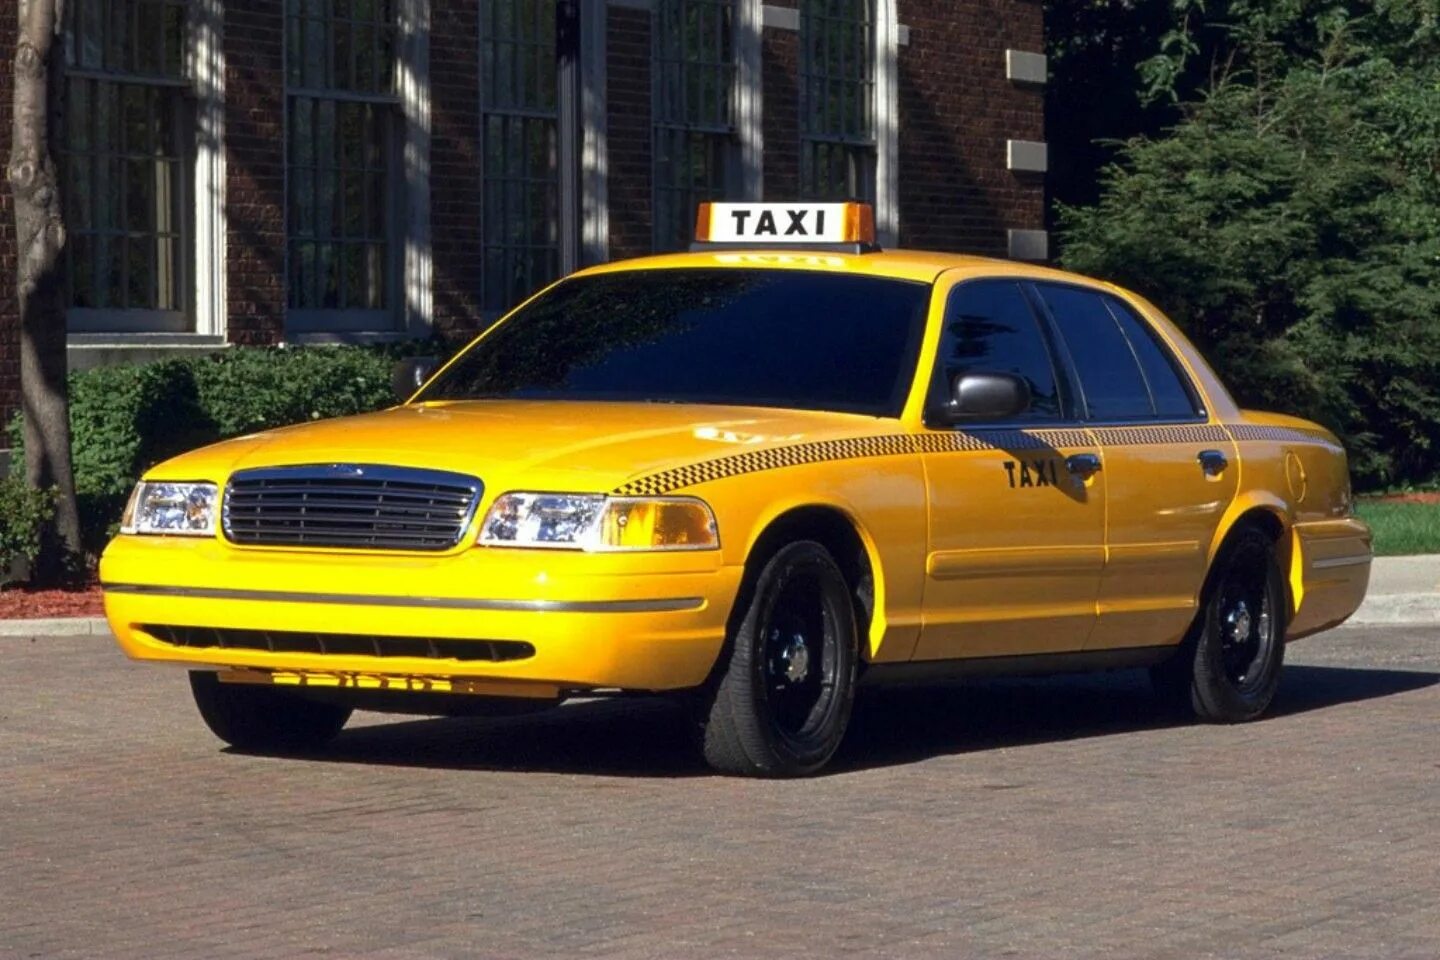 Ford Crown Victoria 1998. Машина Ford Crown Victoria Taxi 1993. Ford Crown Victoria 1998 Taxi. Автомобиль для такси 2024